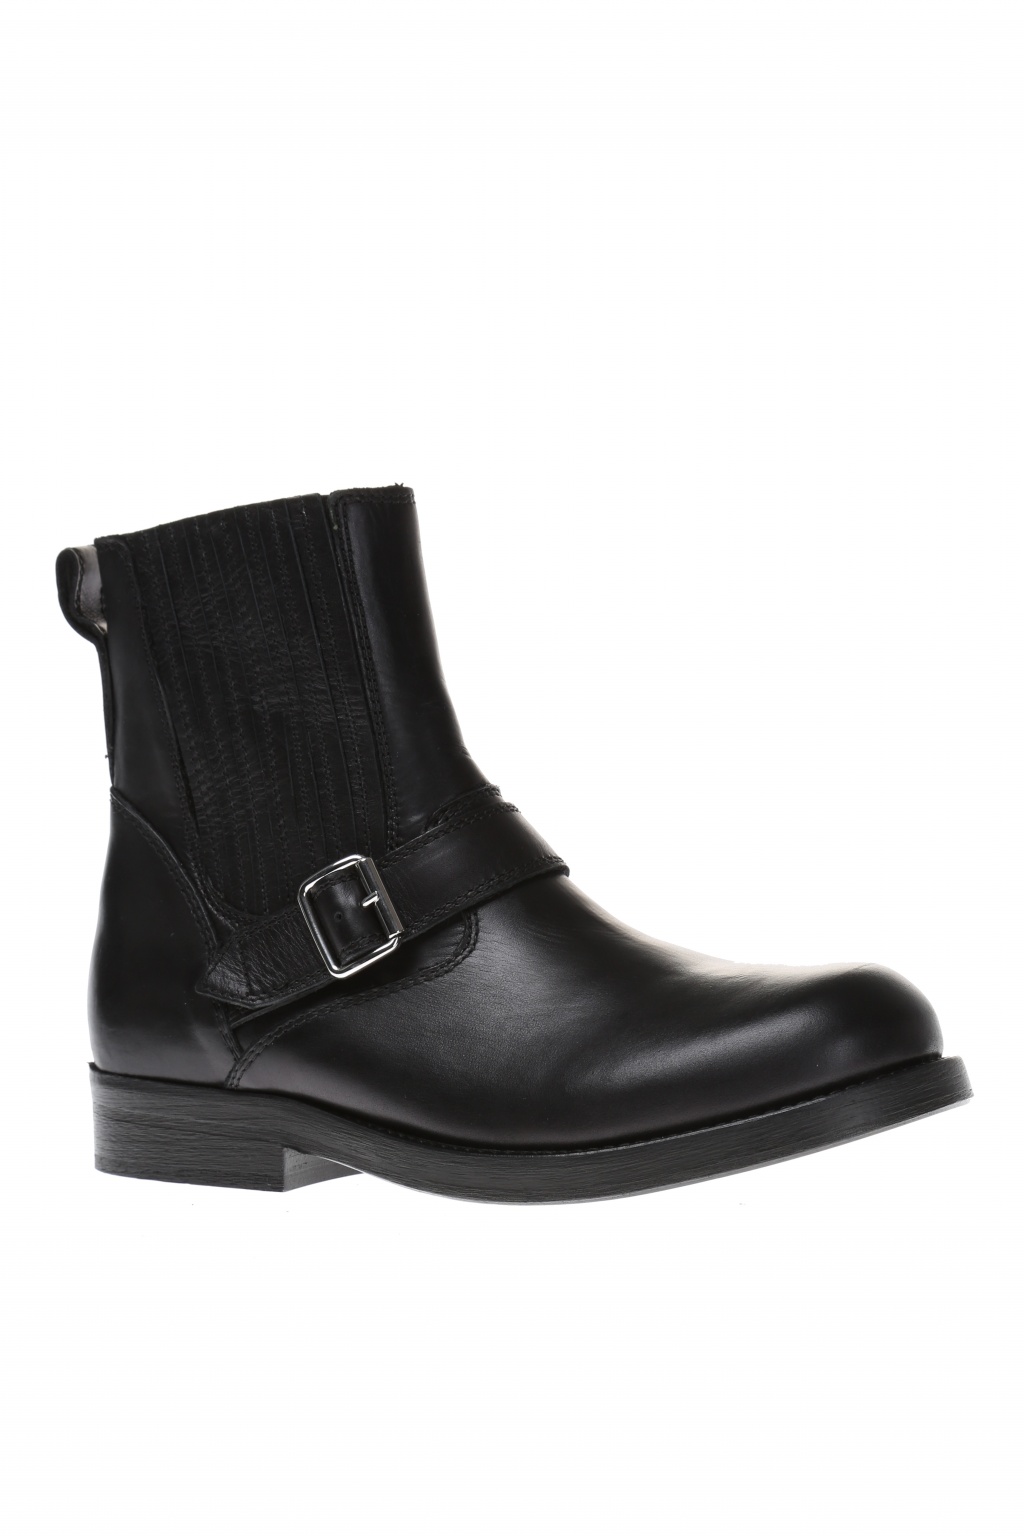 Diesel Black Gold Leather Boots | Men's Shoes | Vitkac